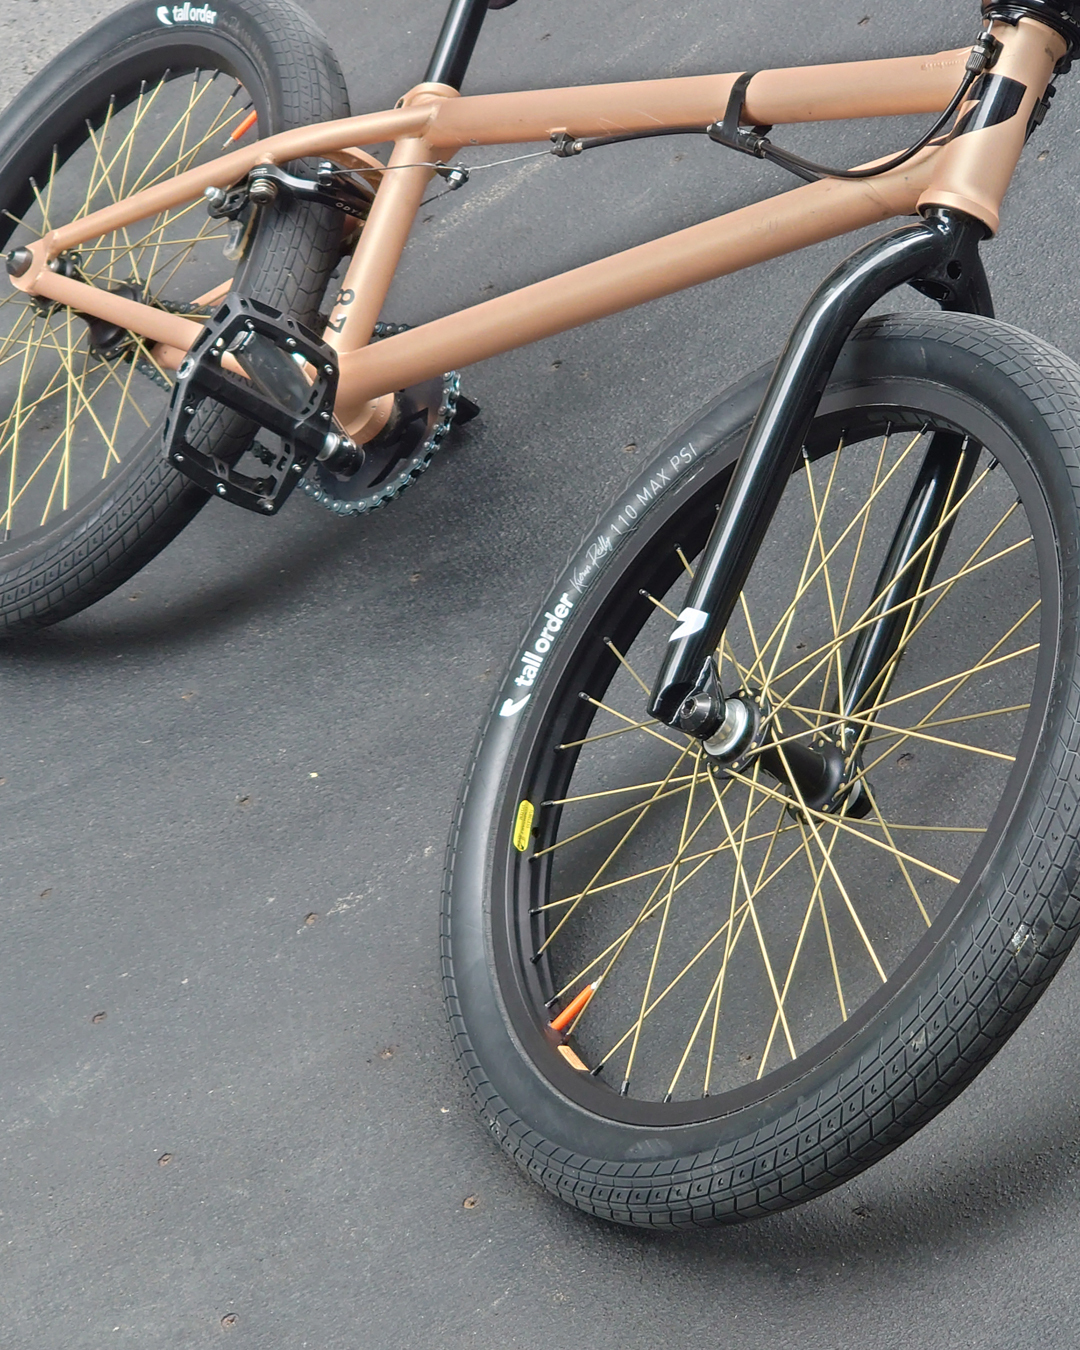 Kieran Rielly's wheels and BMX